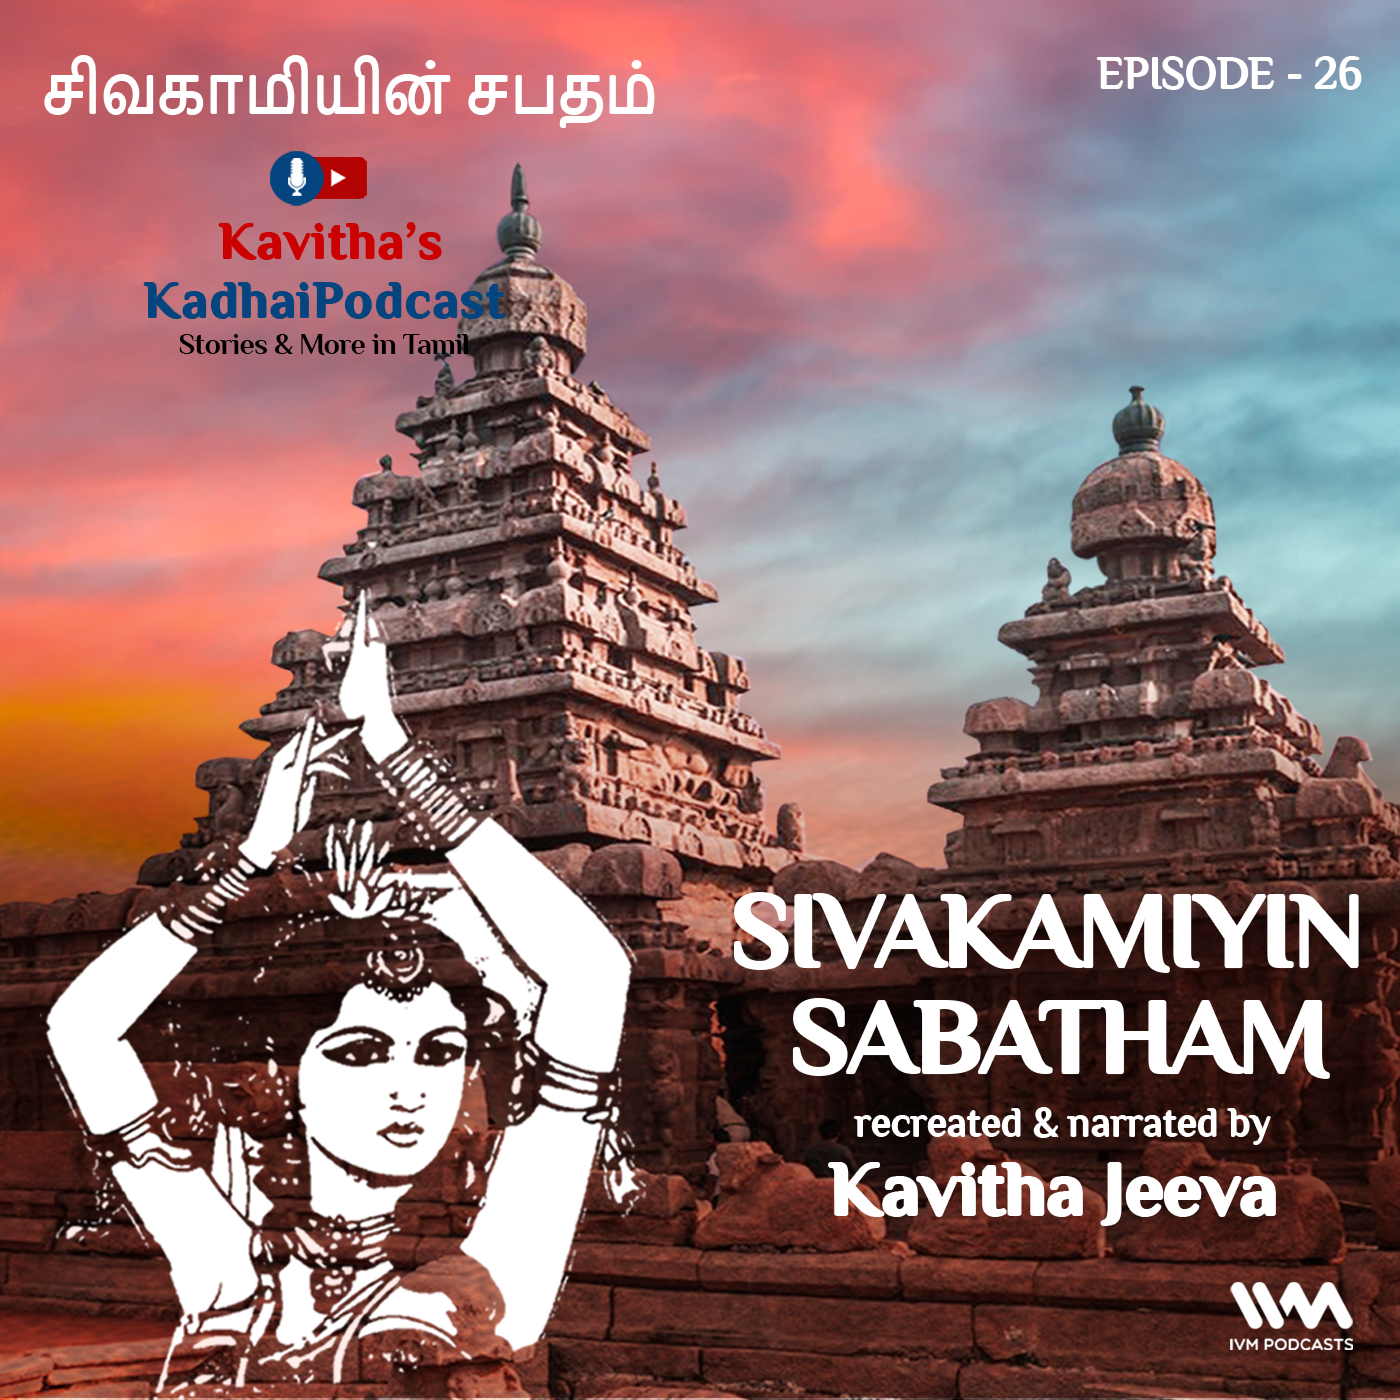 KadhaiPodcast’s Sivakamiyin Sabatham - Episode # 26